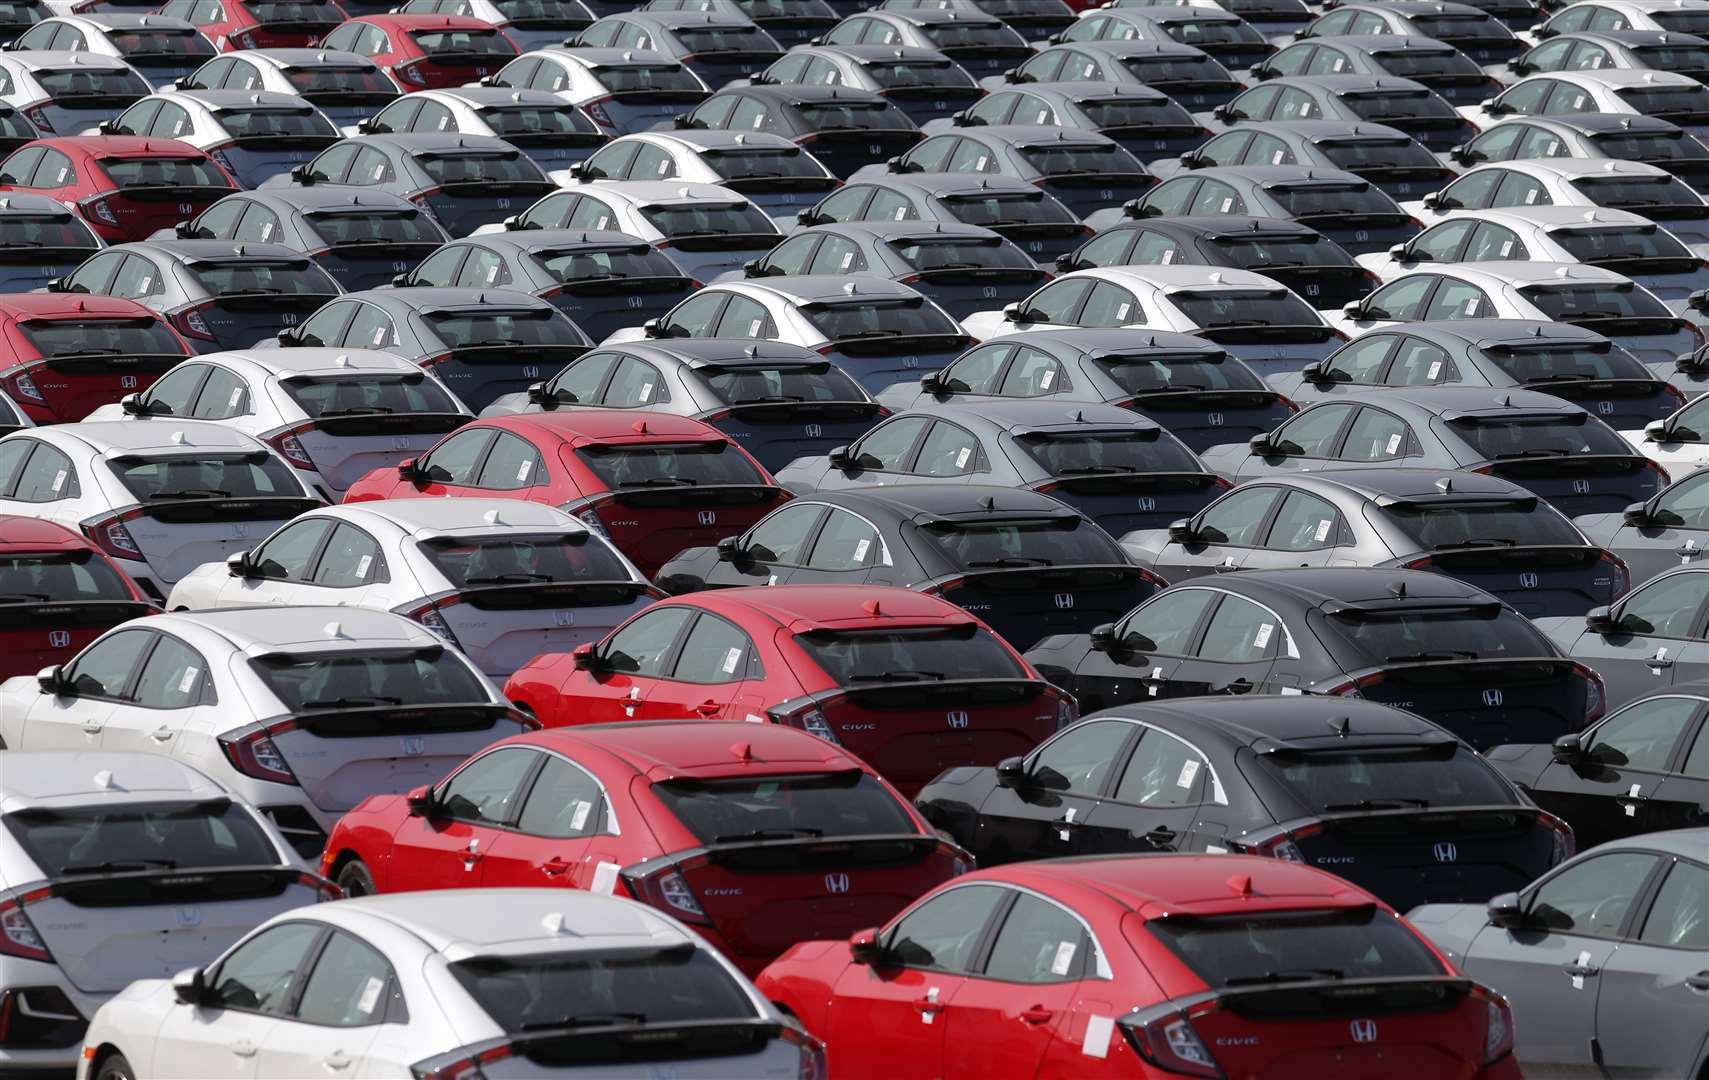 Honda cars are lined up at Southampton Docks (Andrew Matthews/PA)